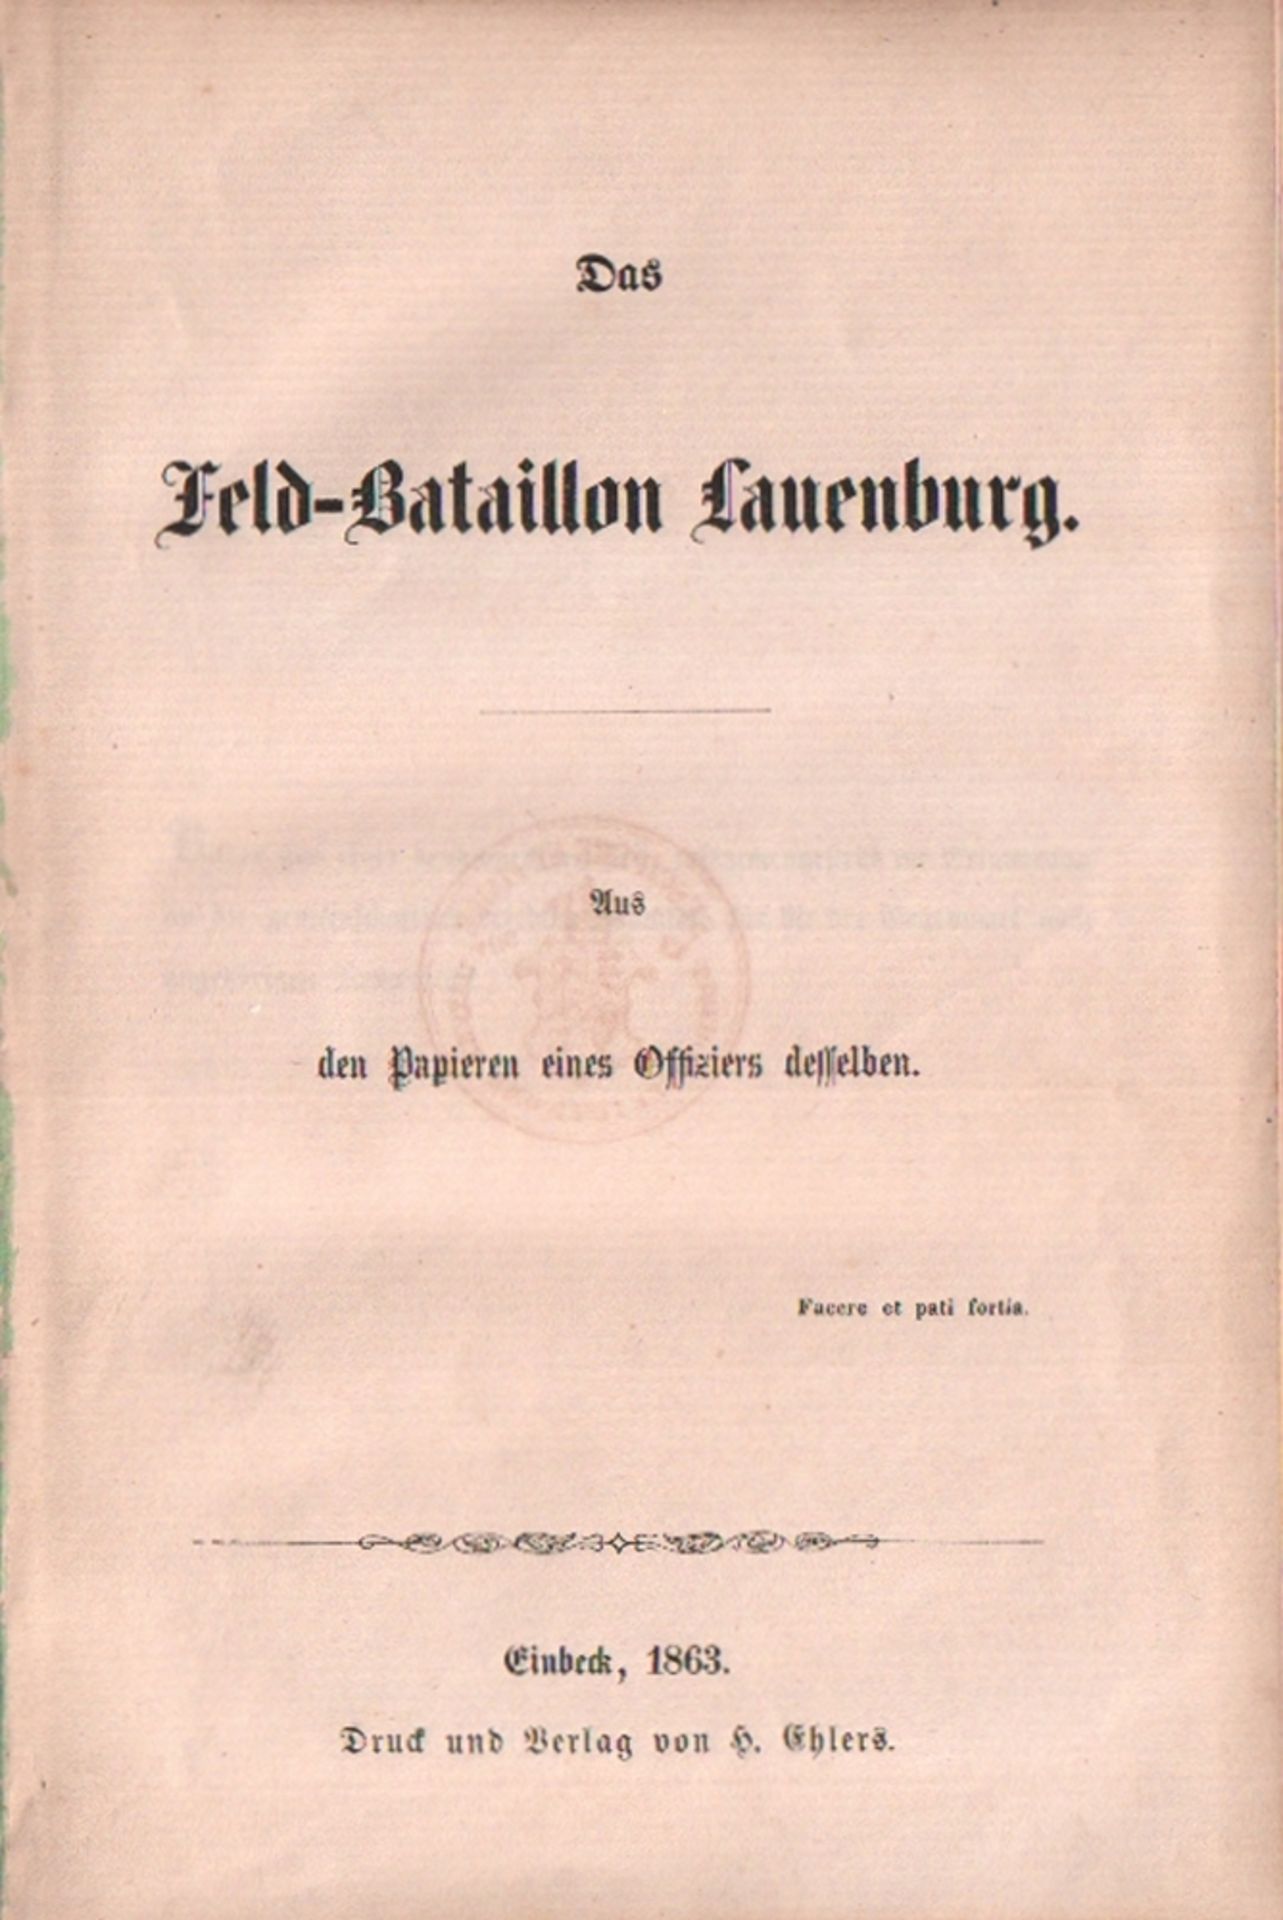 Lauenburg. Das Feld - Bataillon Lauenburg.